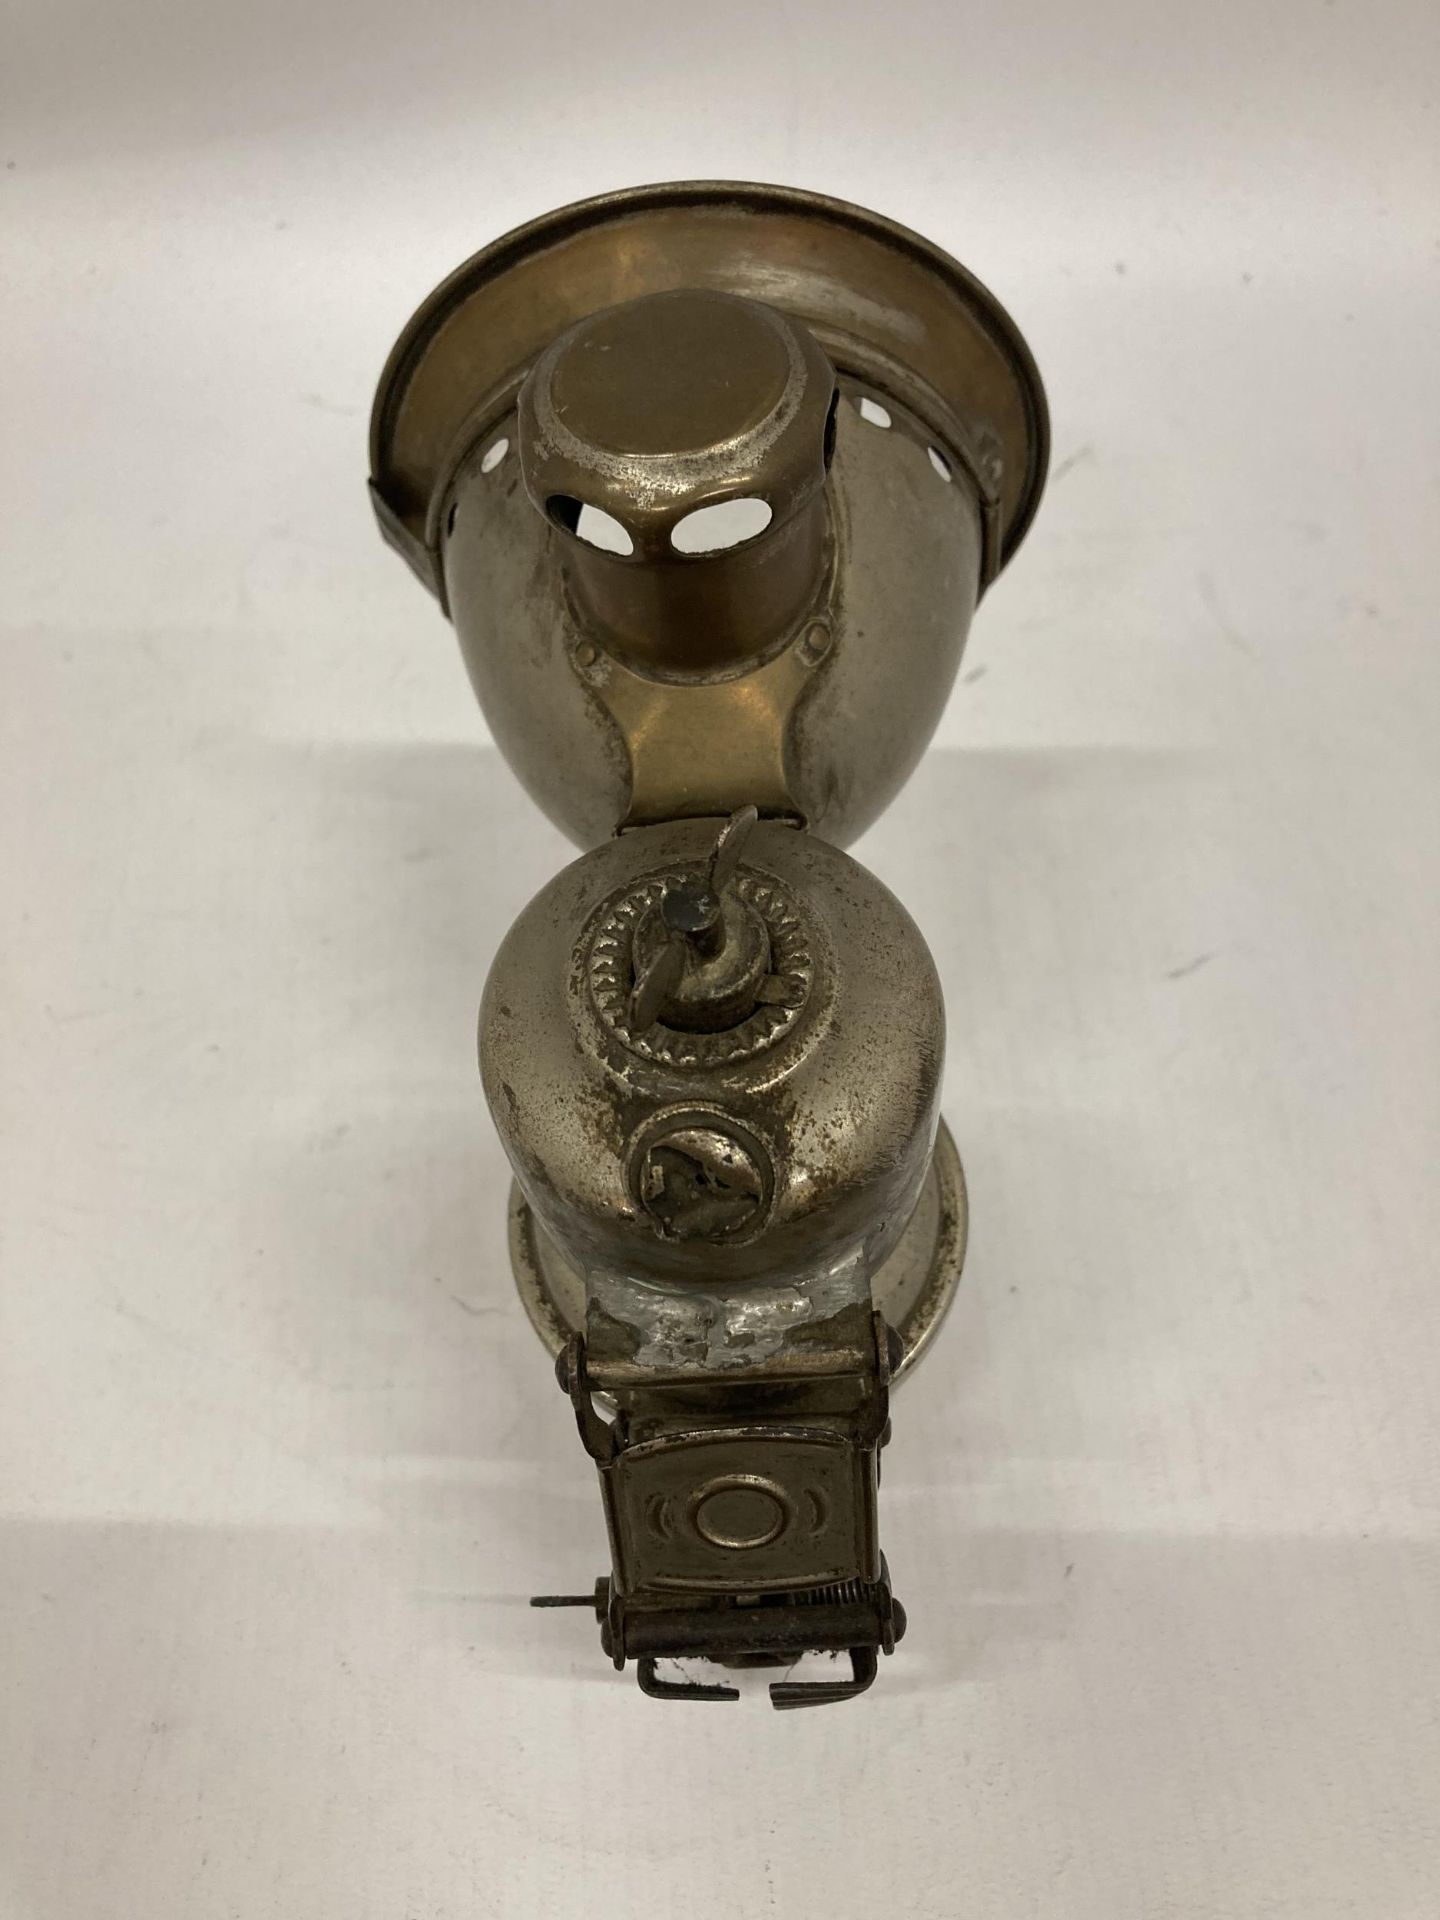 A VINTAGE STEEL CARBIDE LAMP - Image 3 of 3